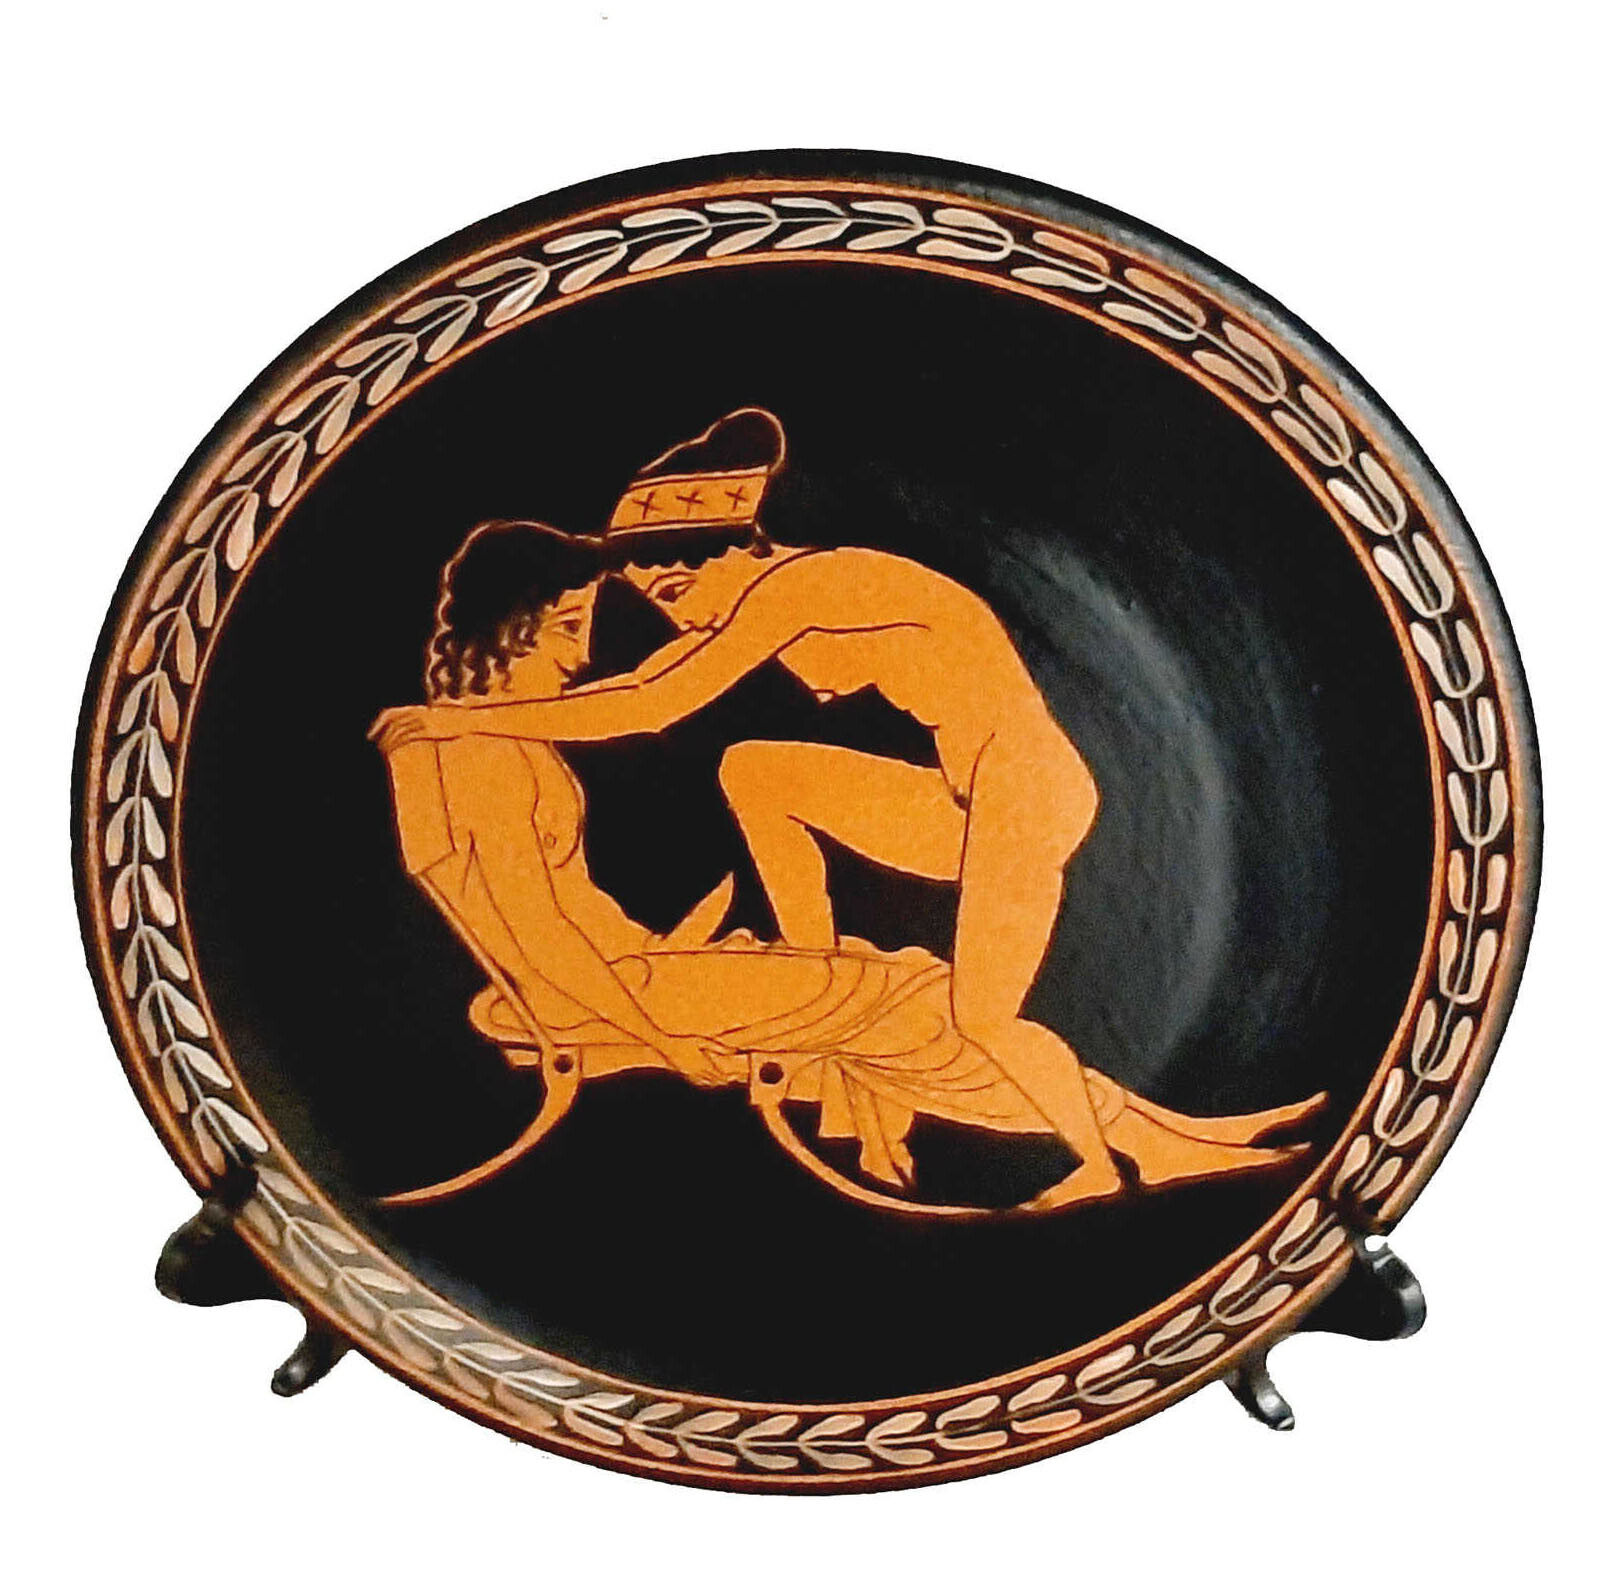  Ceramic Plate 20cm,Red figure Pottery,erotic scene